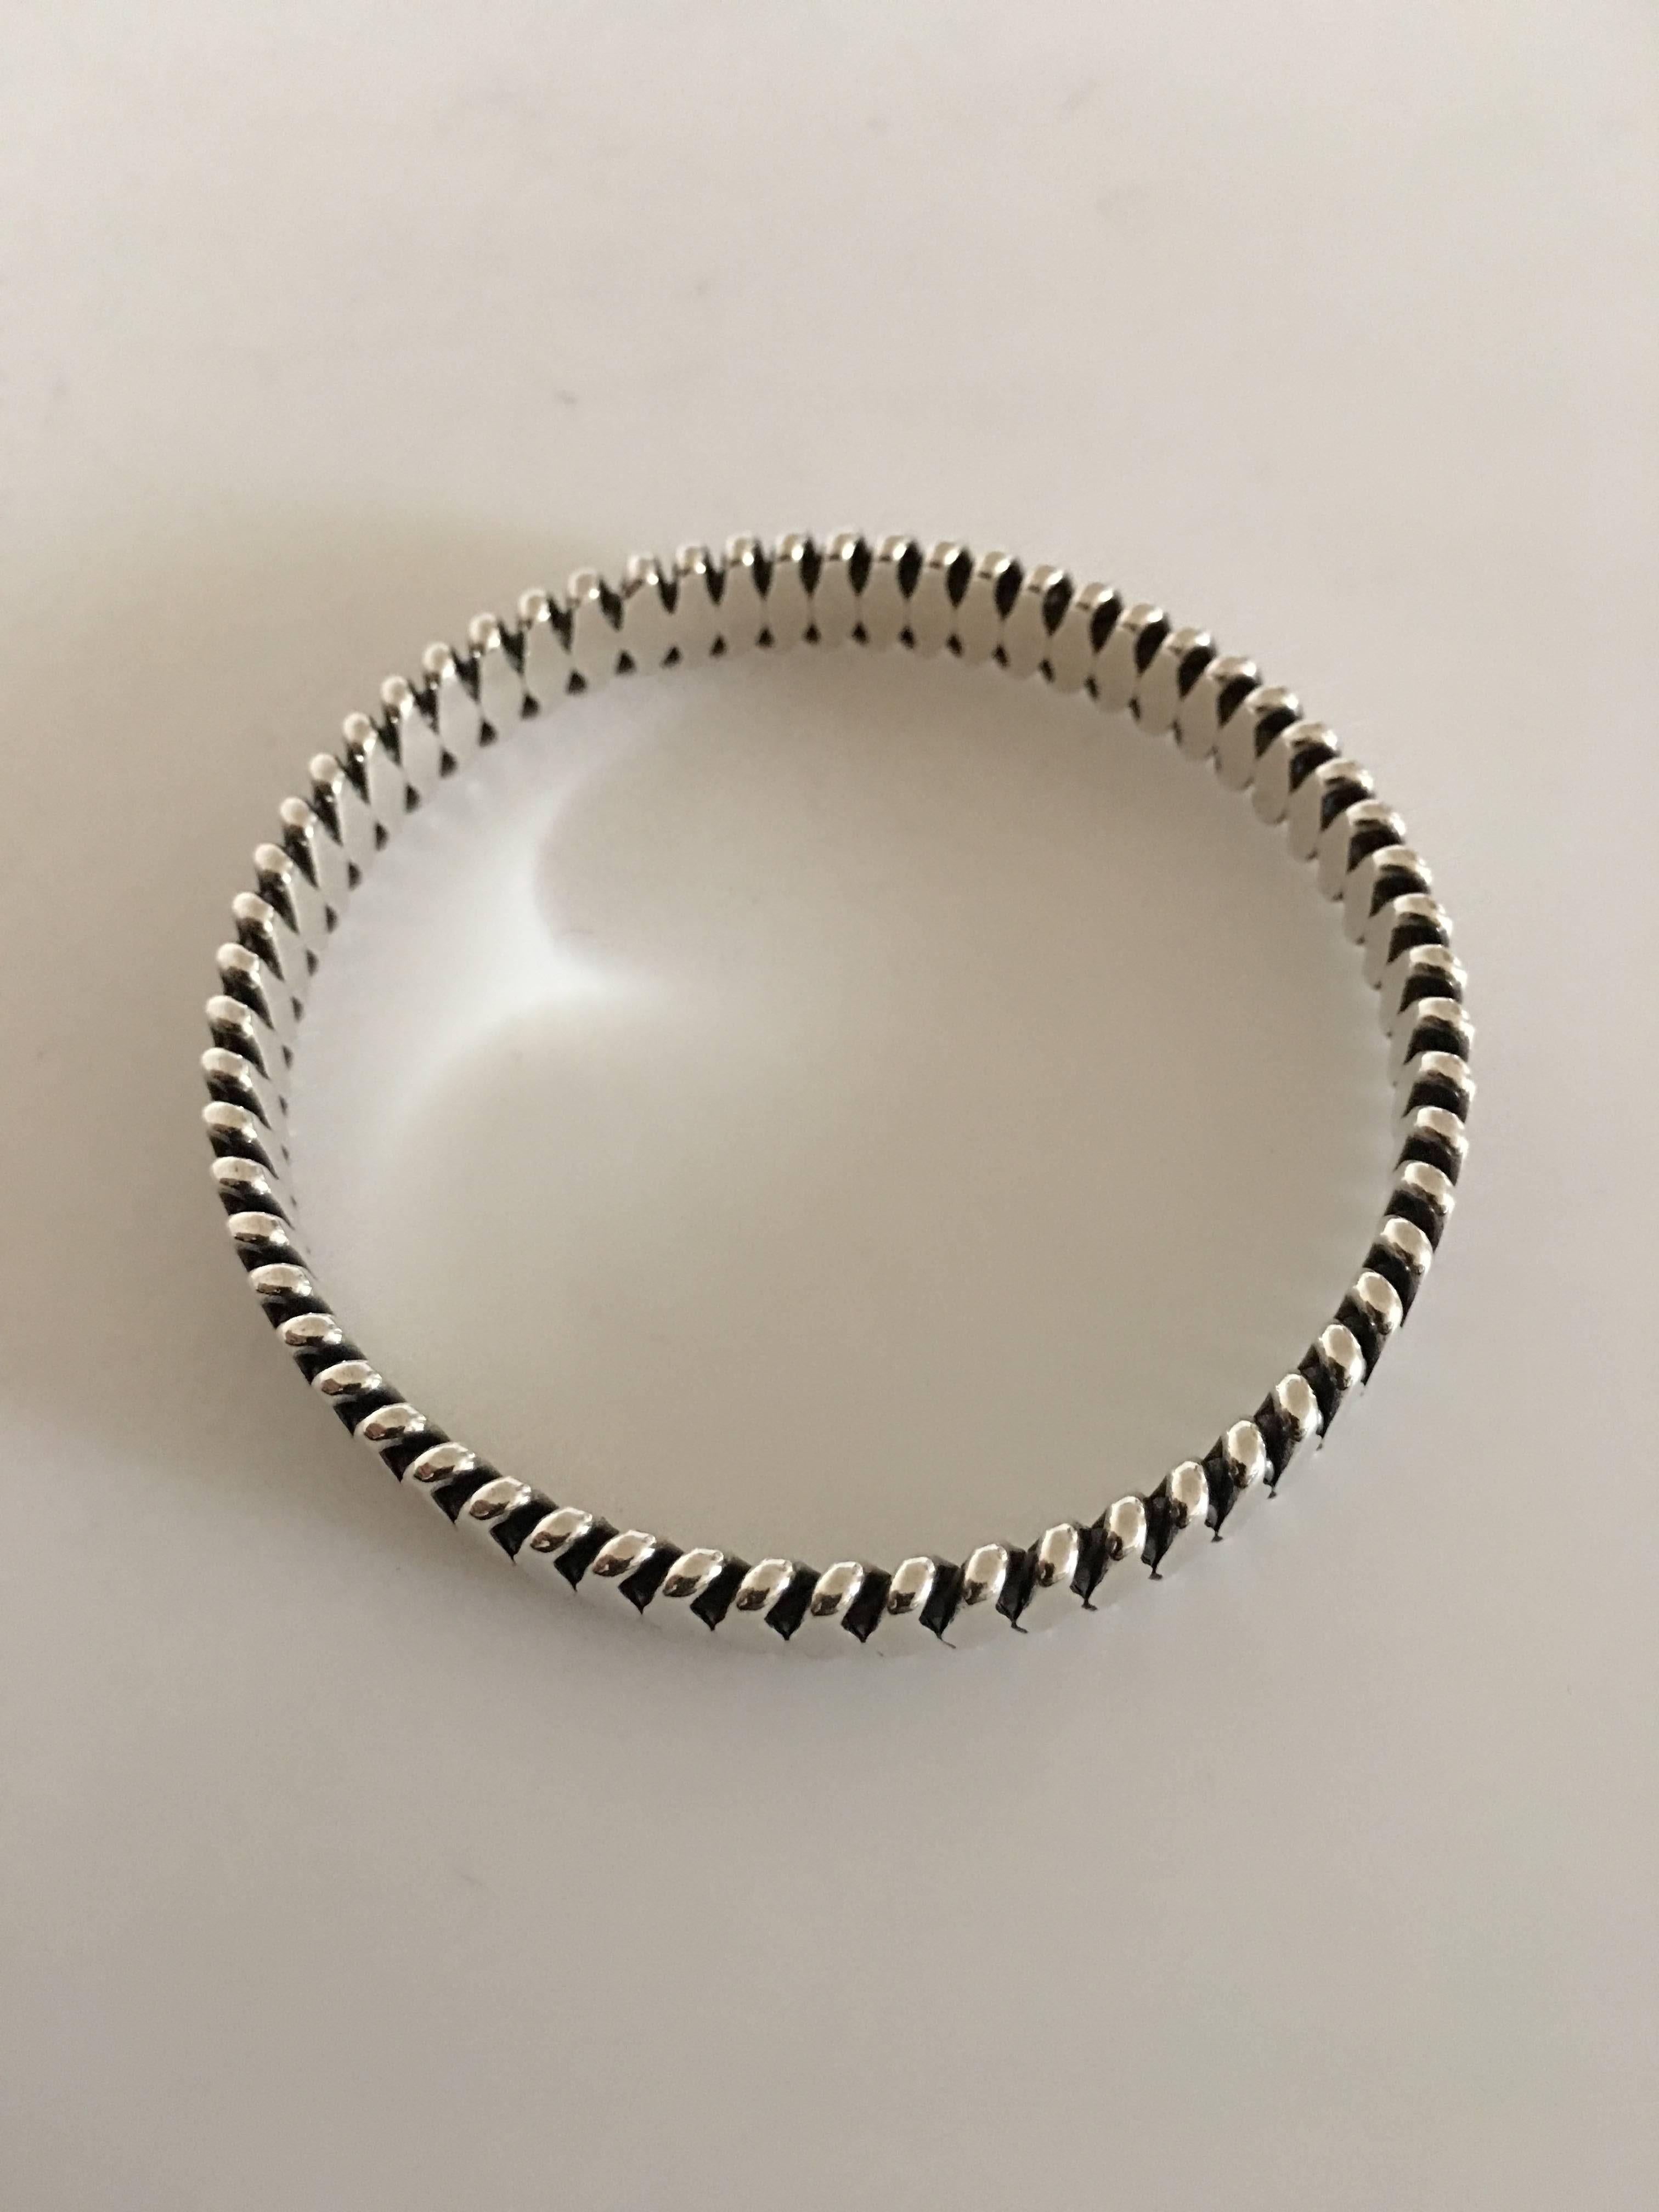 Hans Hansen Sterling Silver Bangle Bracelet No. 202. Measures 6 cm (2 23/64